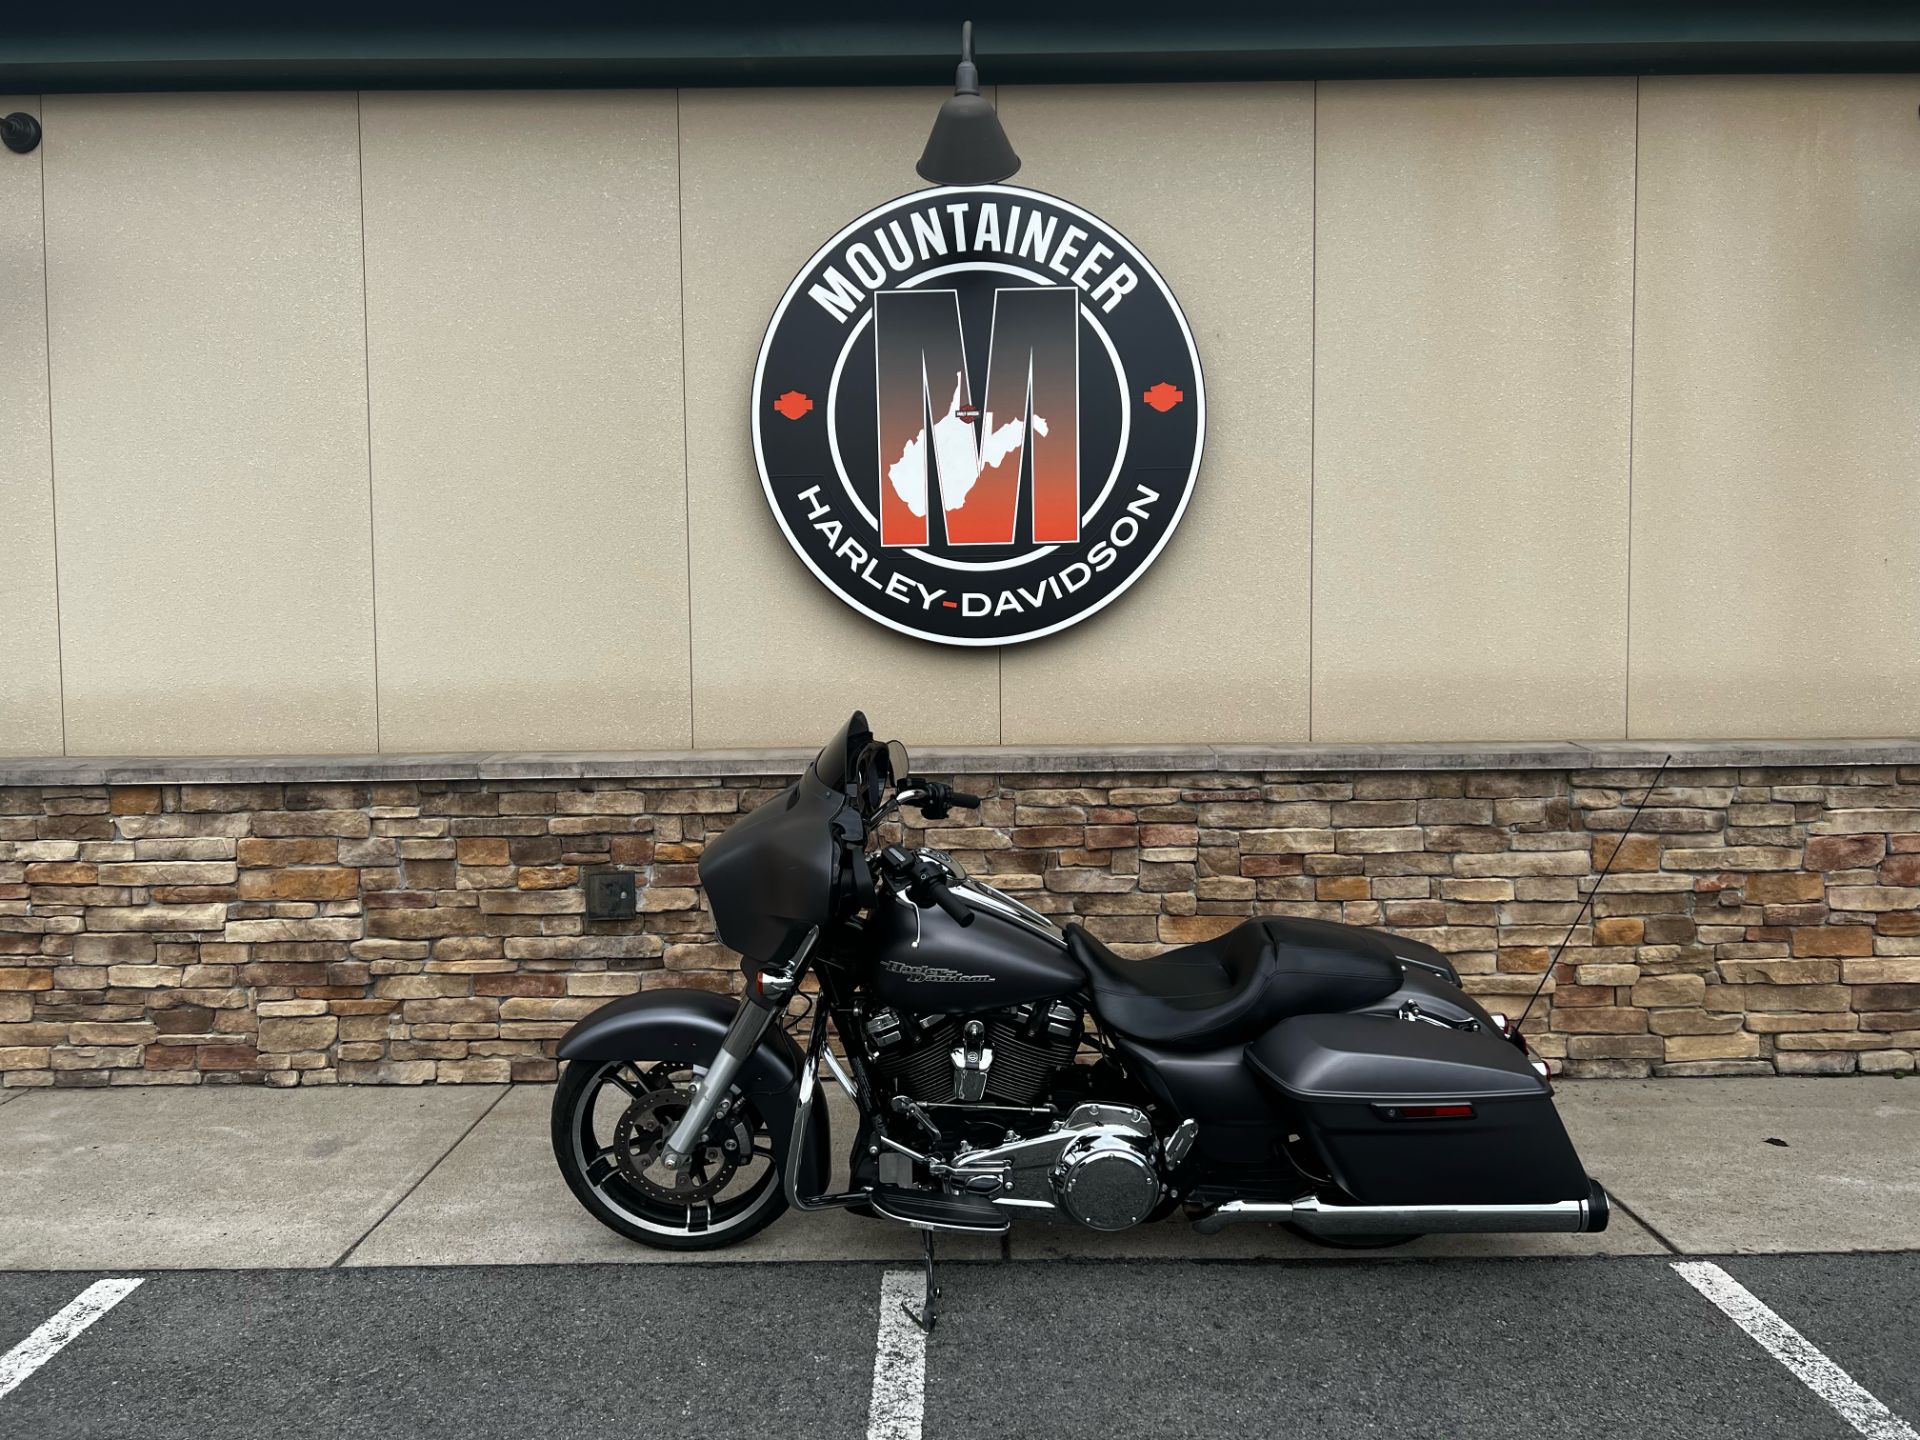 2017 Harley-Davidson Street Glide® Special in Morgantown, West Virginia - Photo 2